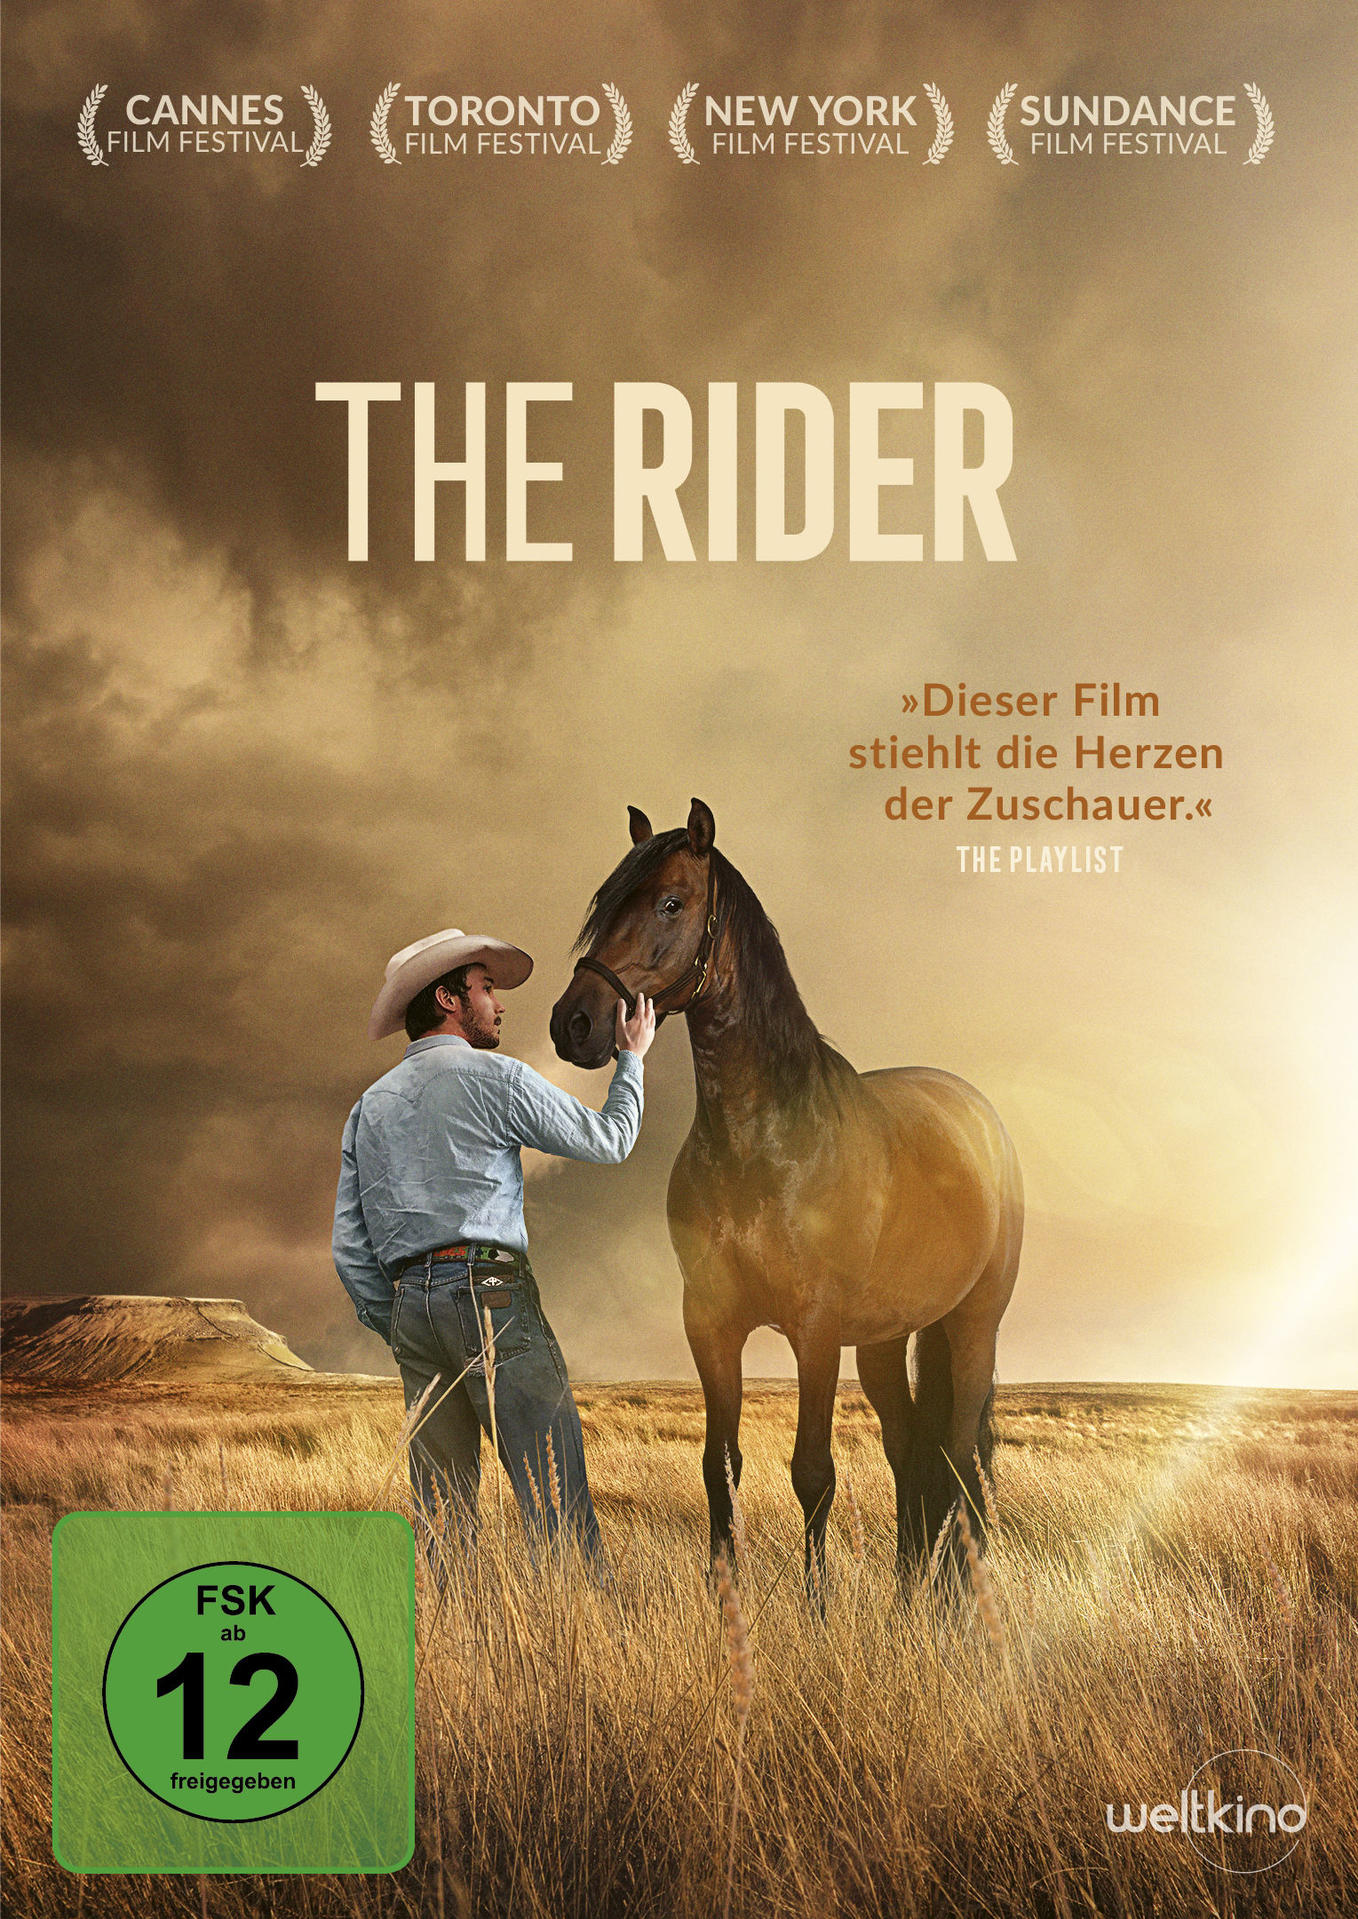 The DVD Rider